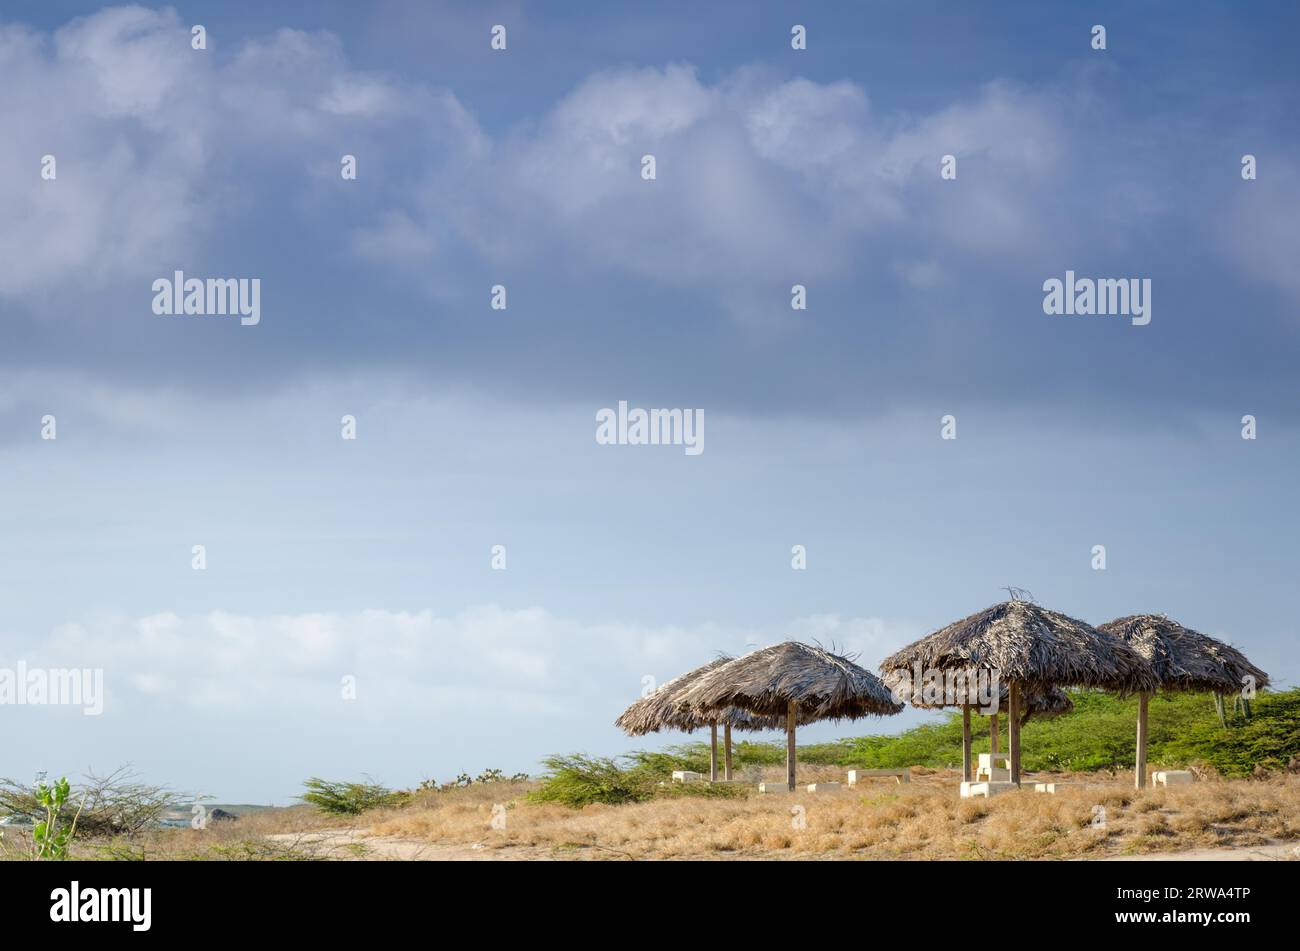 Rastplatz am Strand auf der Insel Aruba, Caribbean Stockfoto